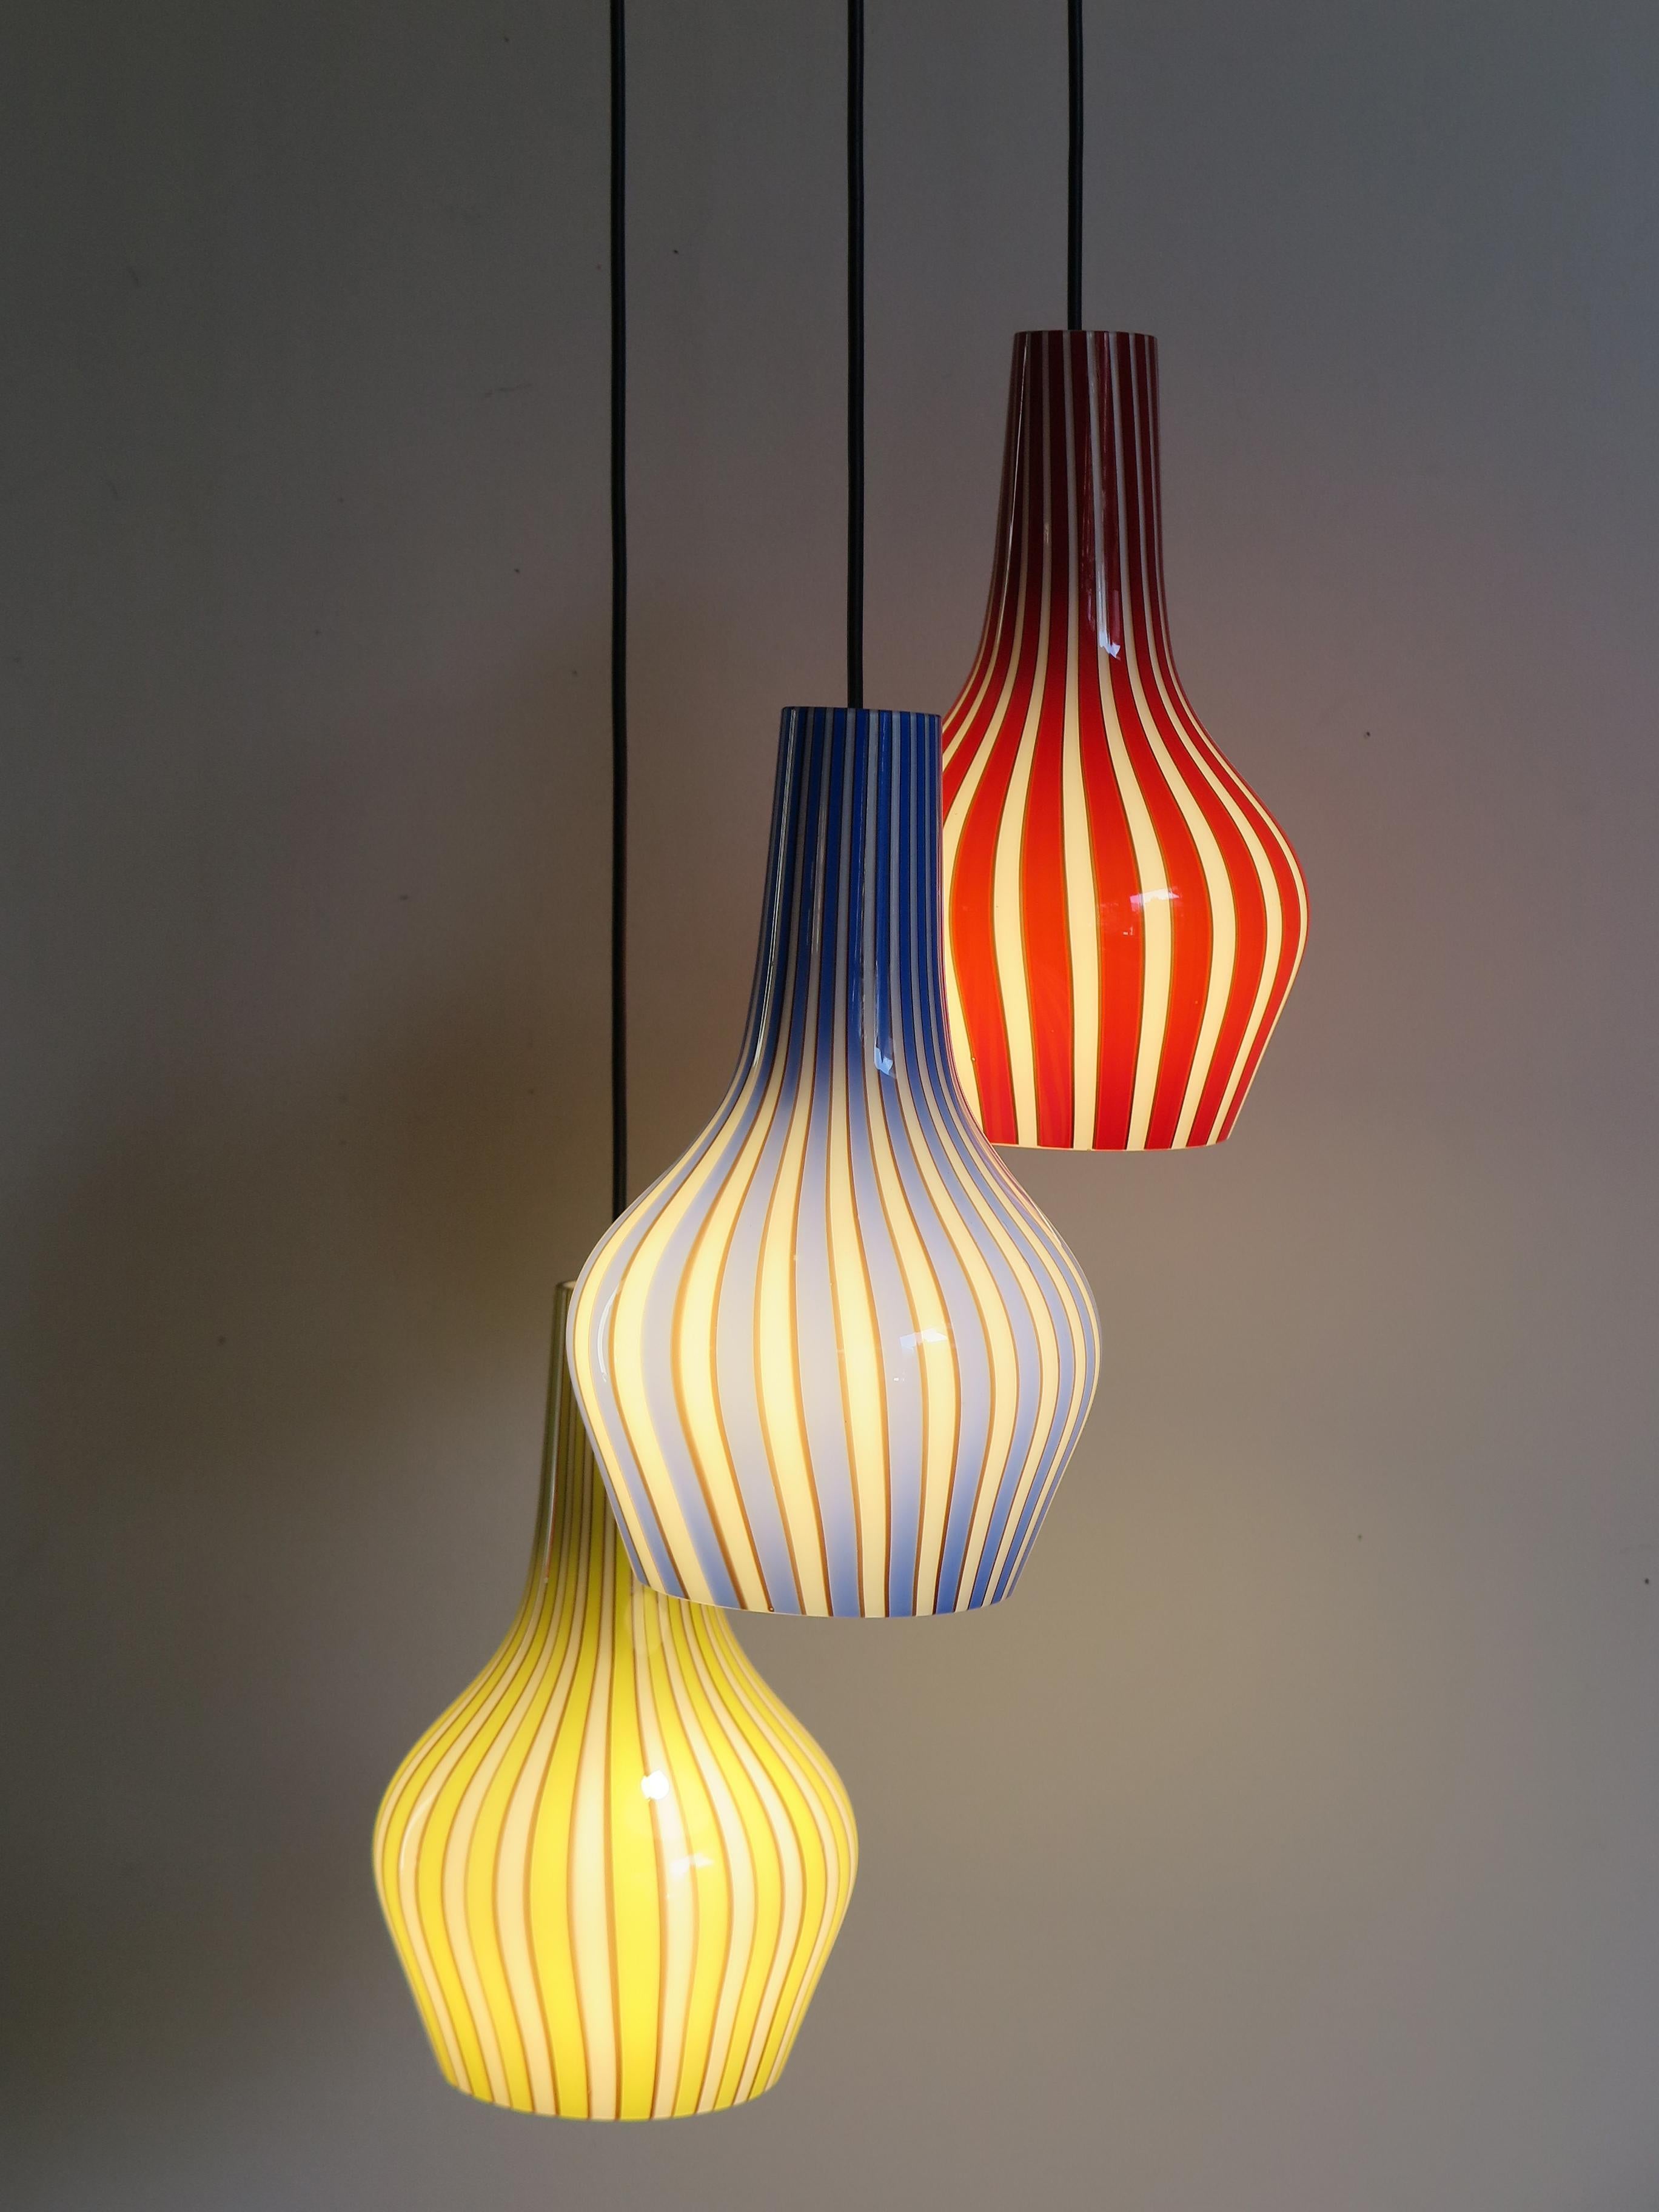 Mid-20th Century Flavio Poli Mid-Century Modern Design Pendant Glass Lamp for Seguso Italy 1950s For Sale